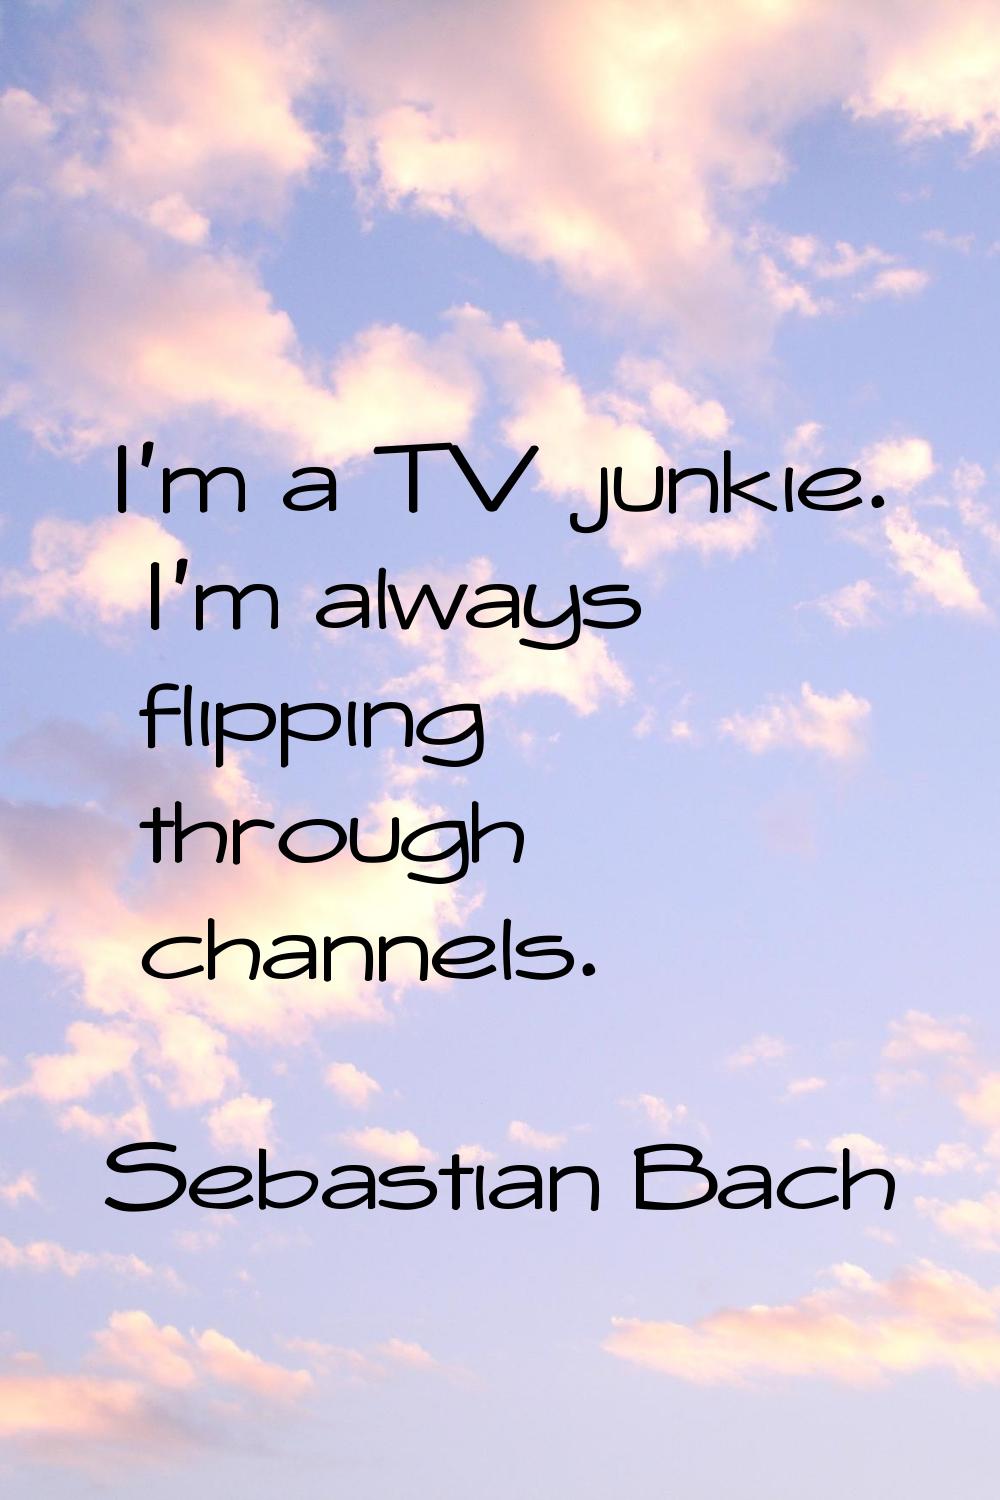 I'm a TV junkie. I'm always flipping through channels.